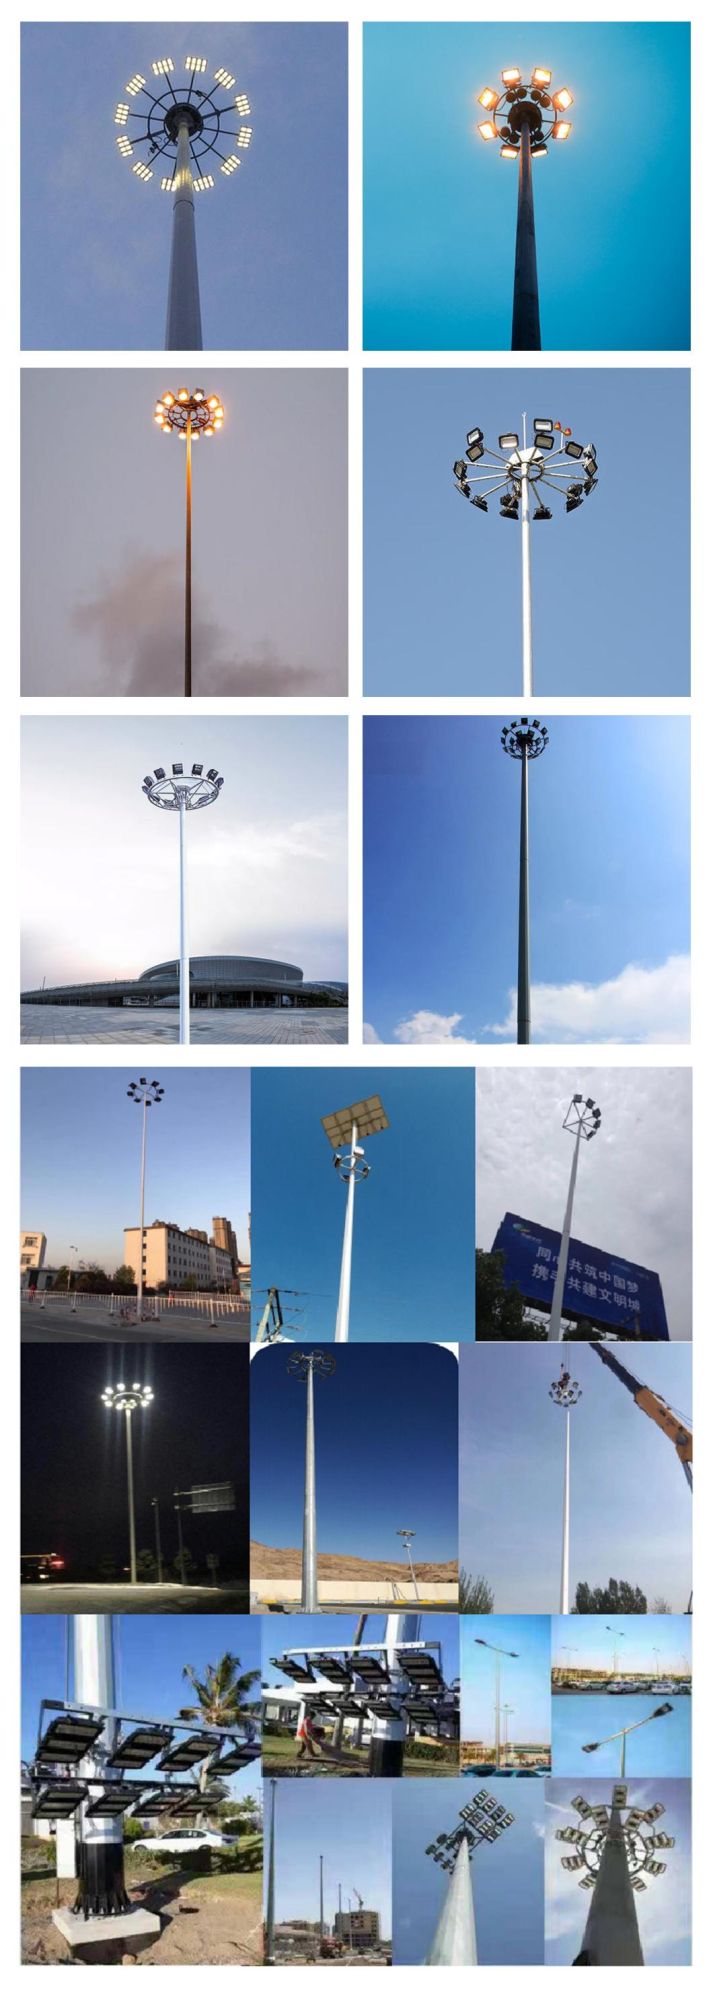 Solar/LED/ High/Mast Street Light/Lighting/Lamp Octagon Q235 Galvanized Steel Pole